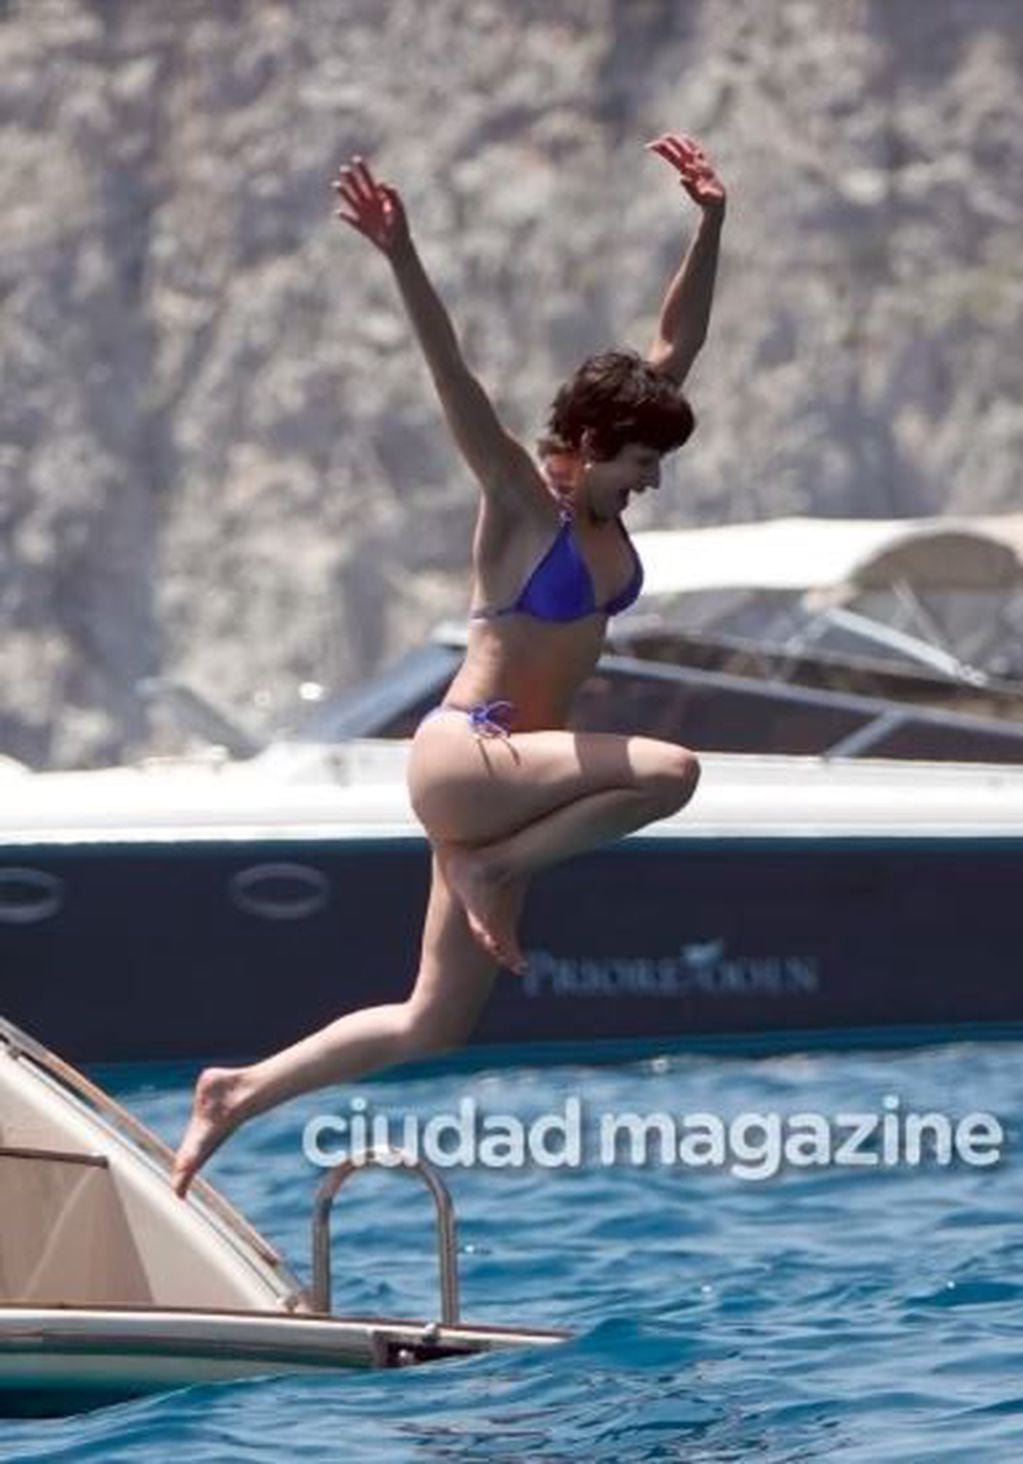 Úrsula se divirtió saltando a las aguas turquesas. (Foto:CiudadMagazine)